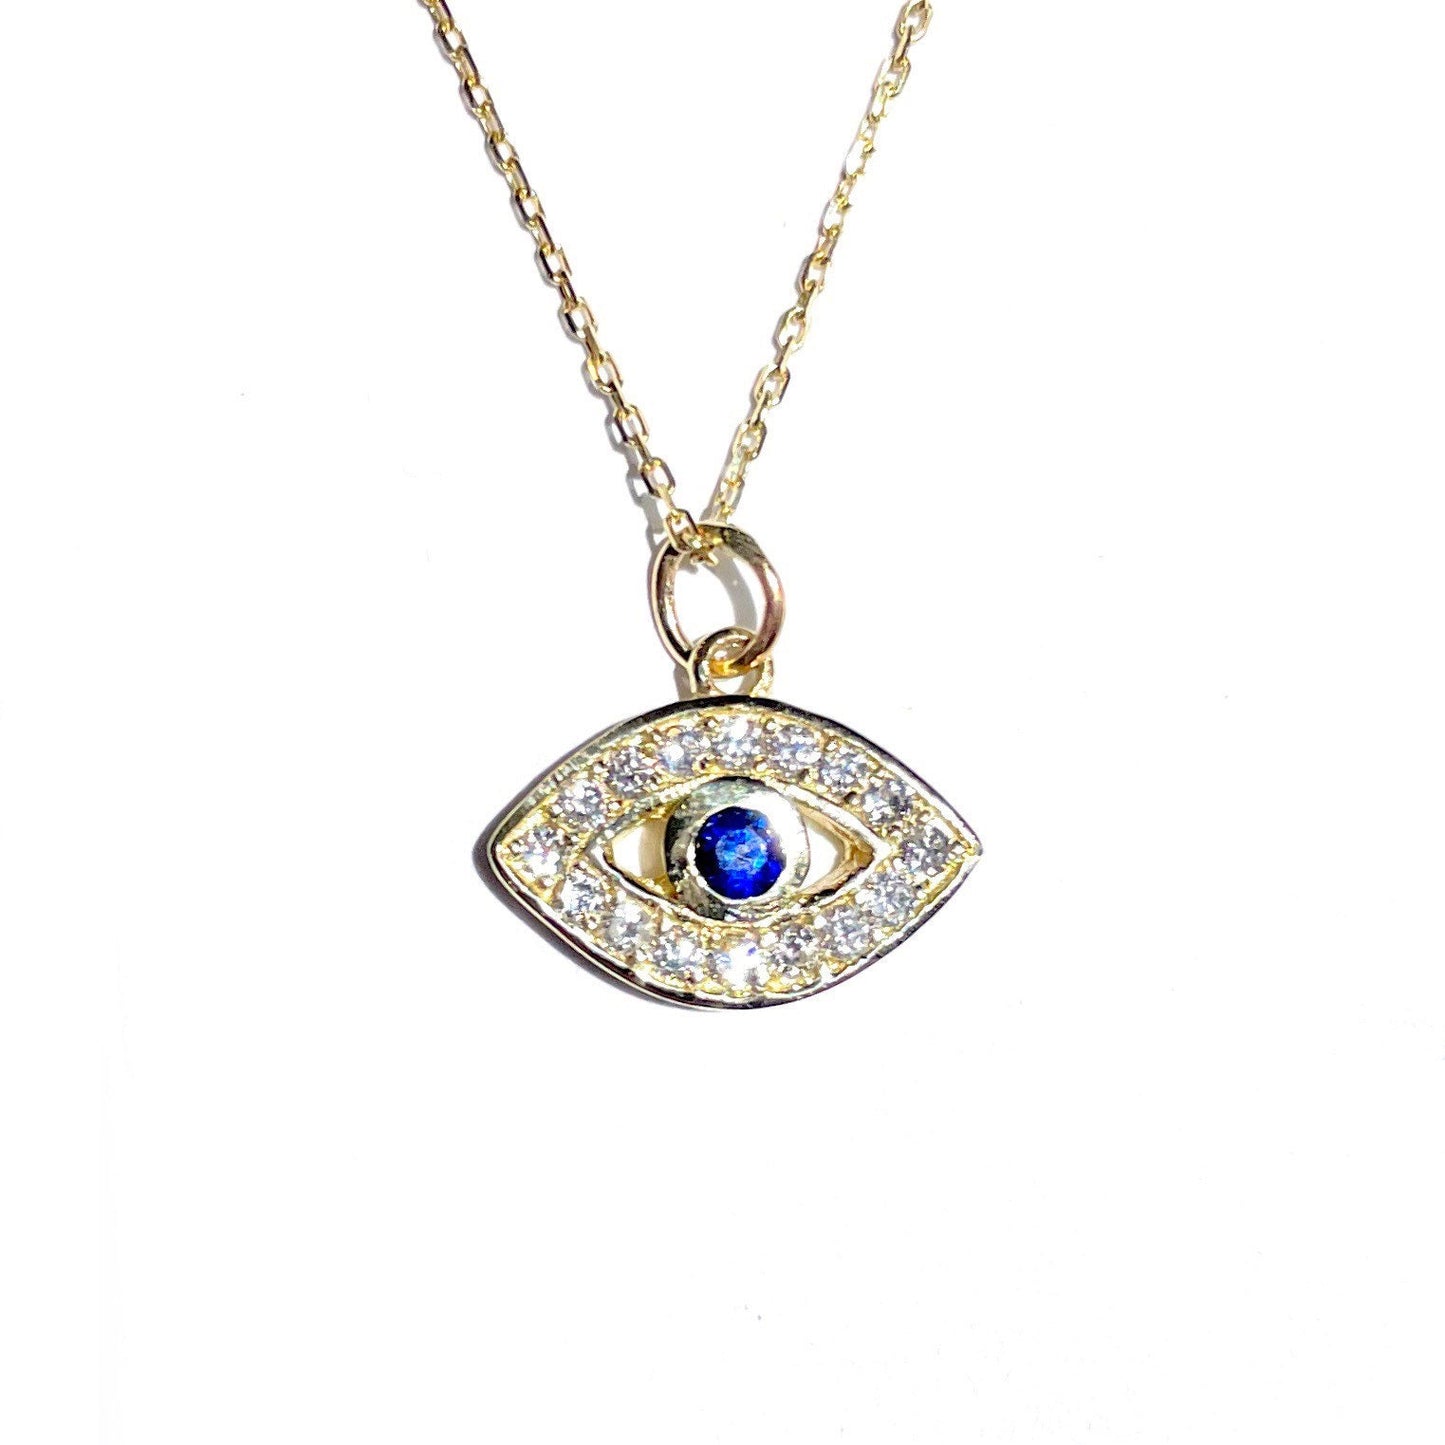 Large Diamond and Sapphire Evil Eye Pendant